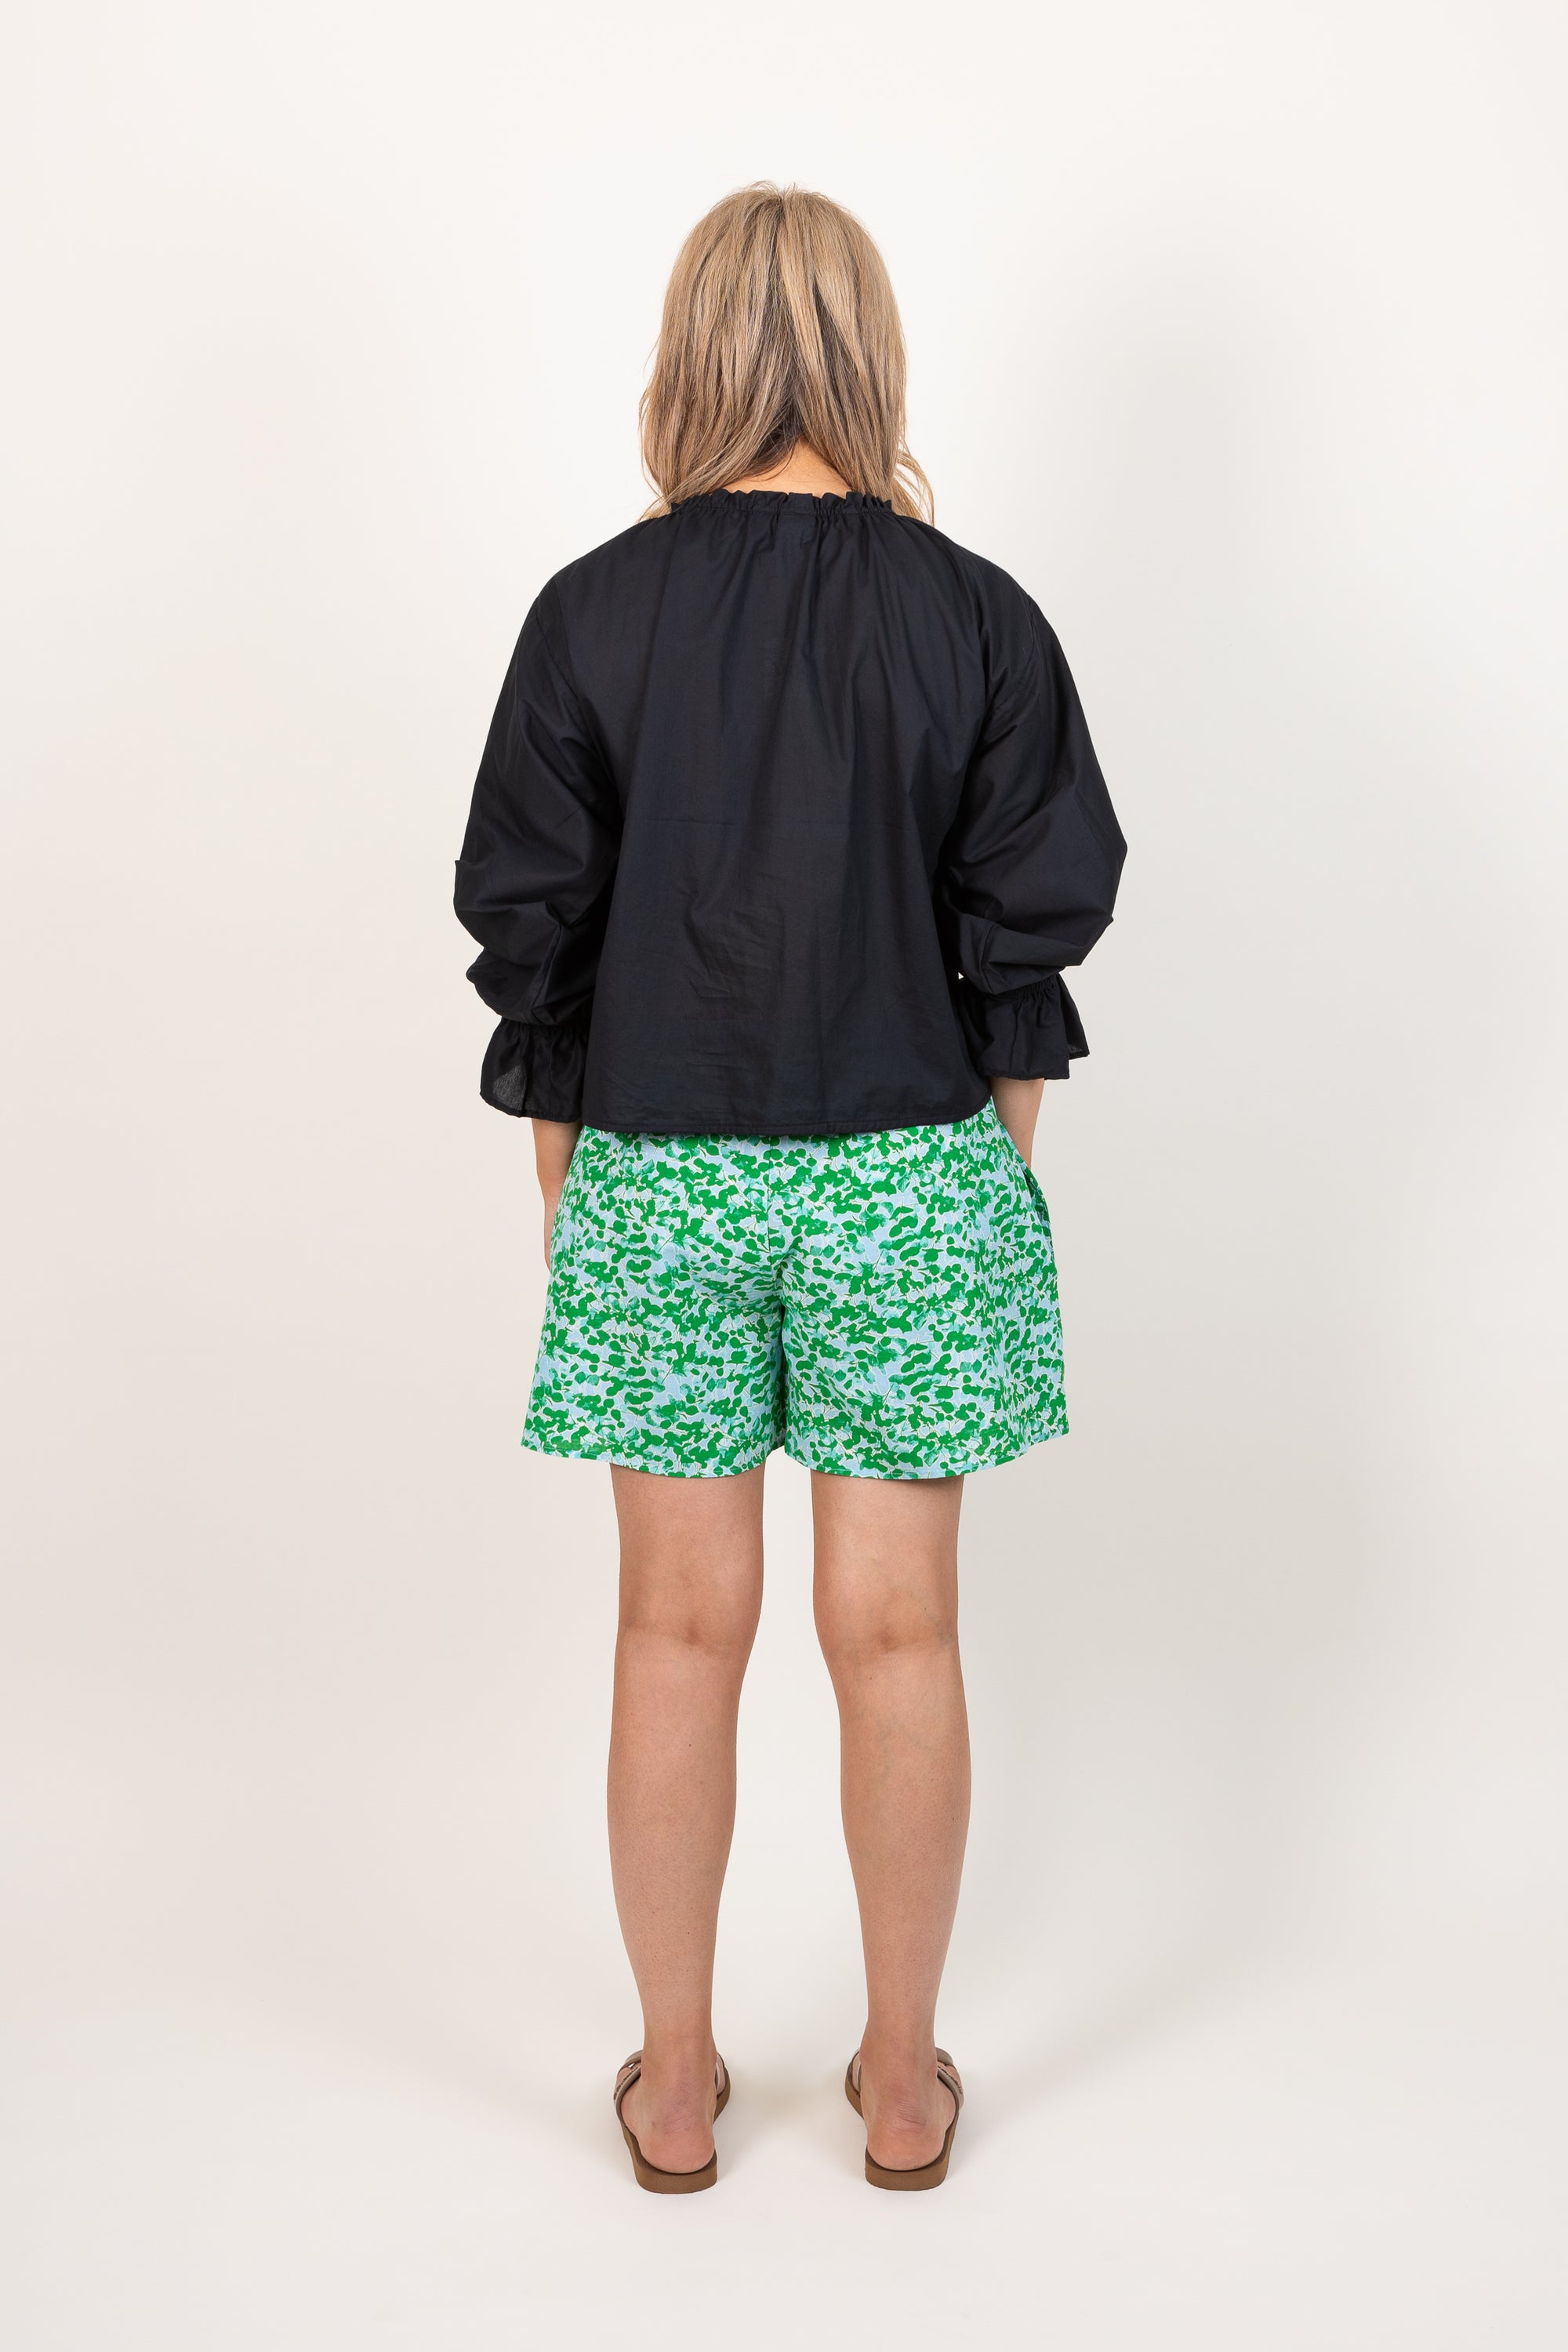 Ames Store Women's Summer Shorts with Pockets Cotton Seersucker